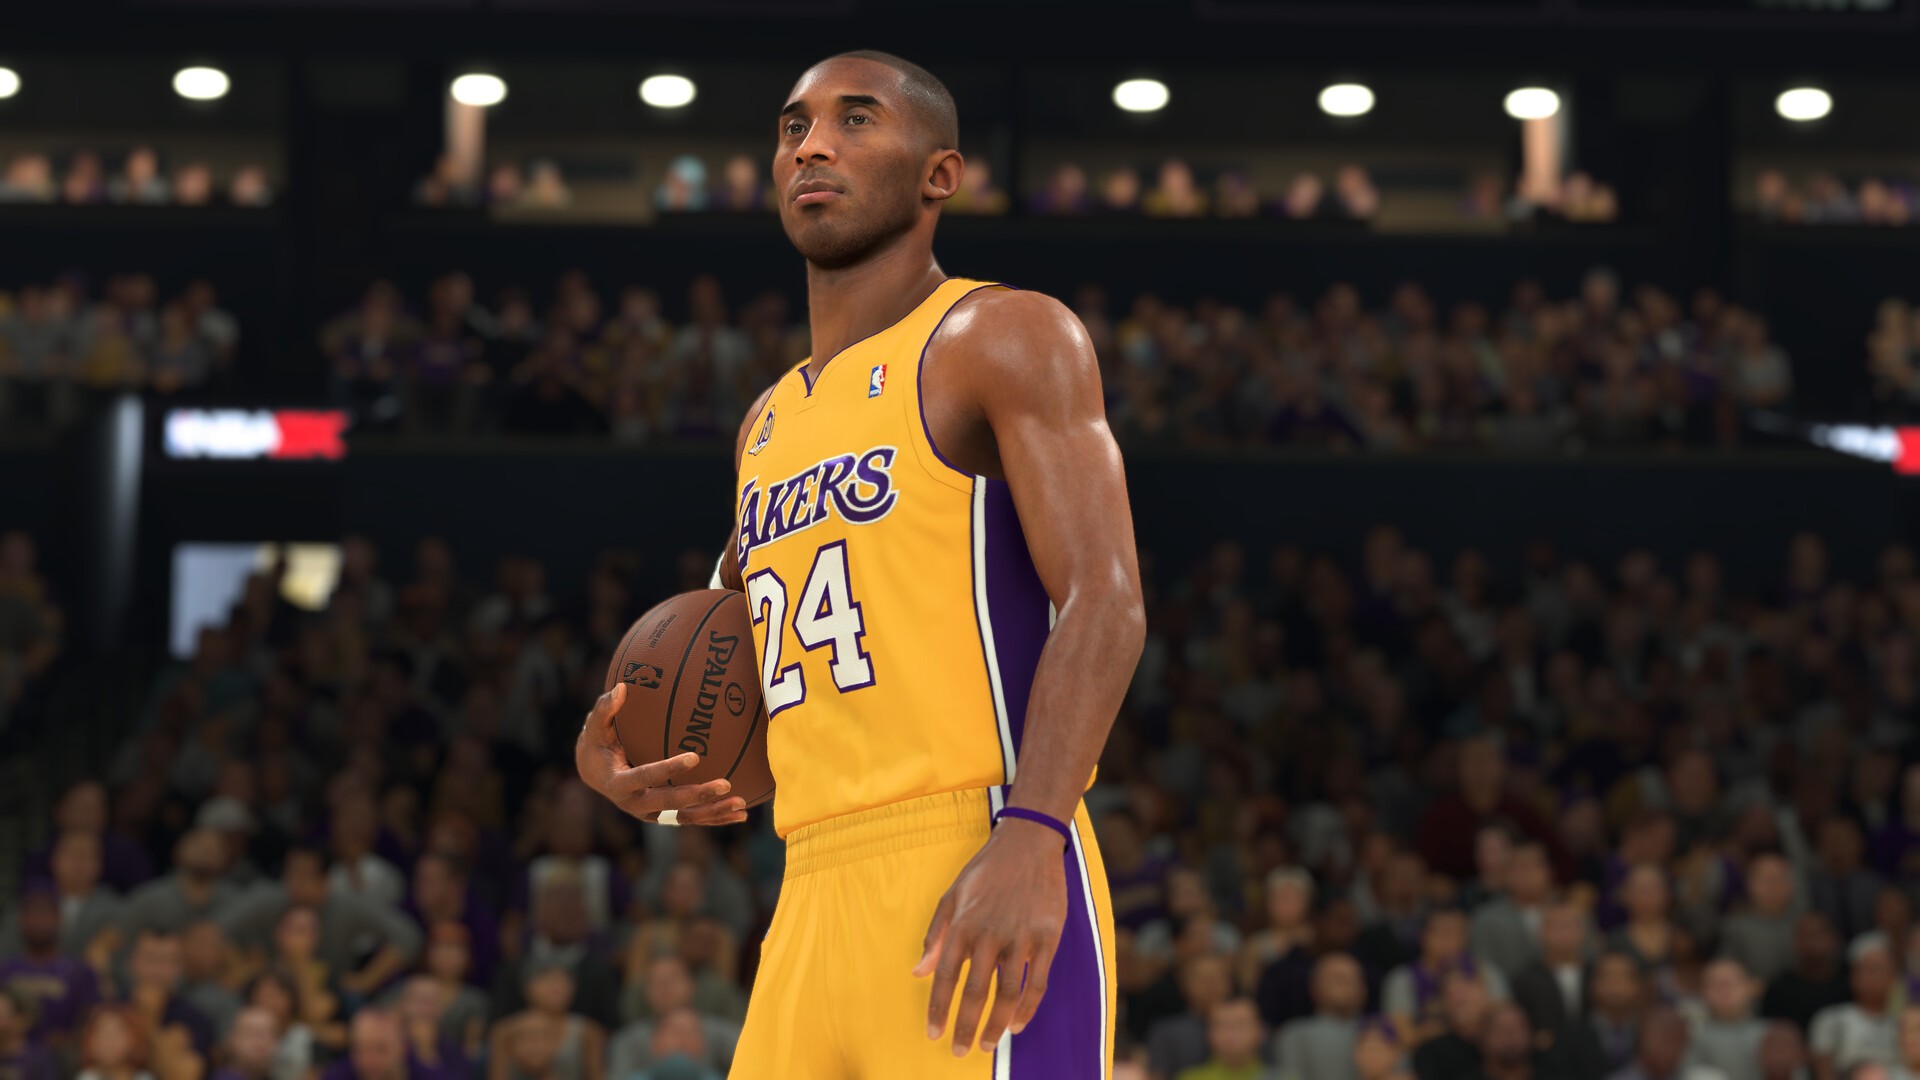 Comprar NBA 2K24 Kobe Bryant Edition Steam